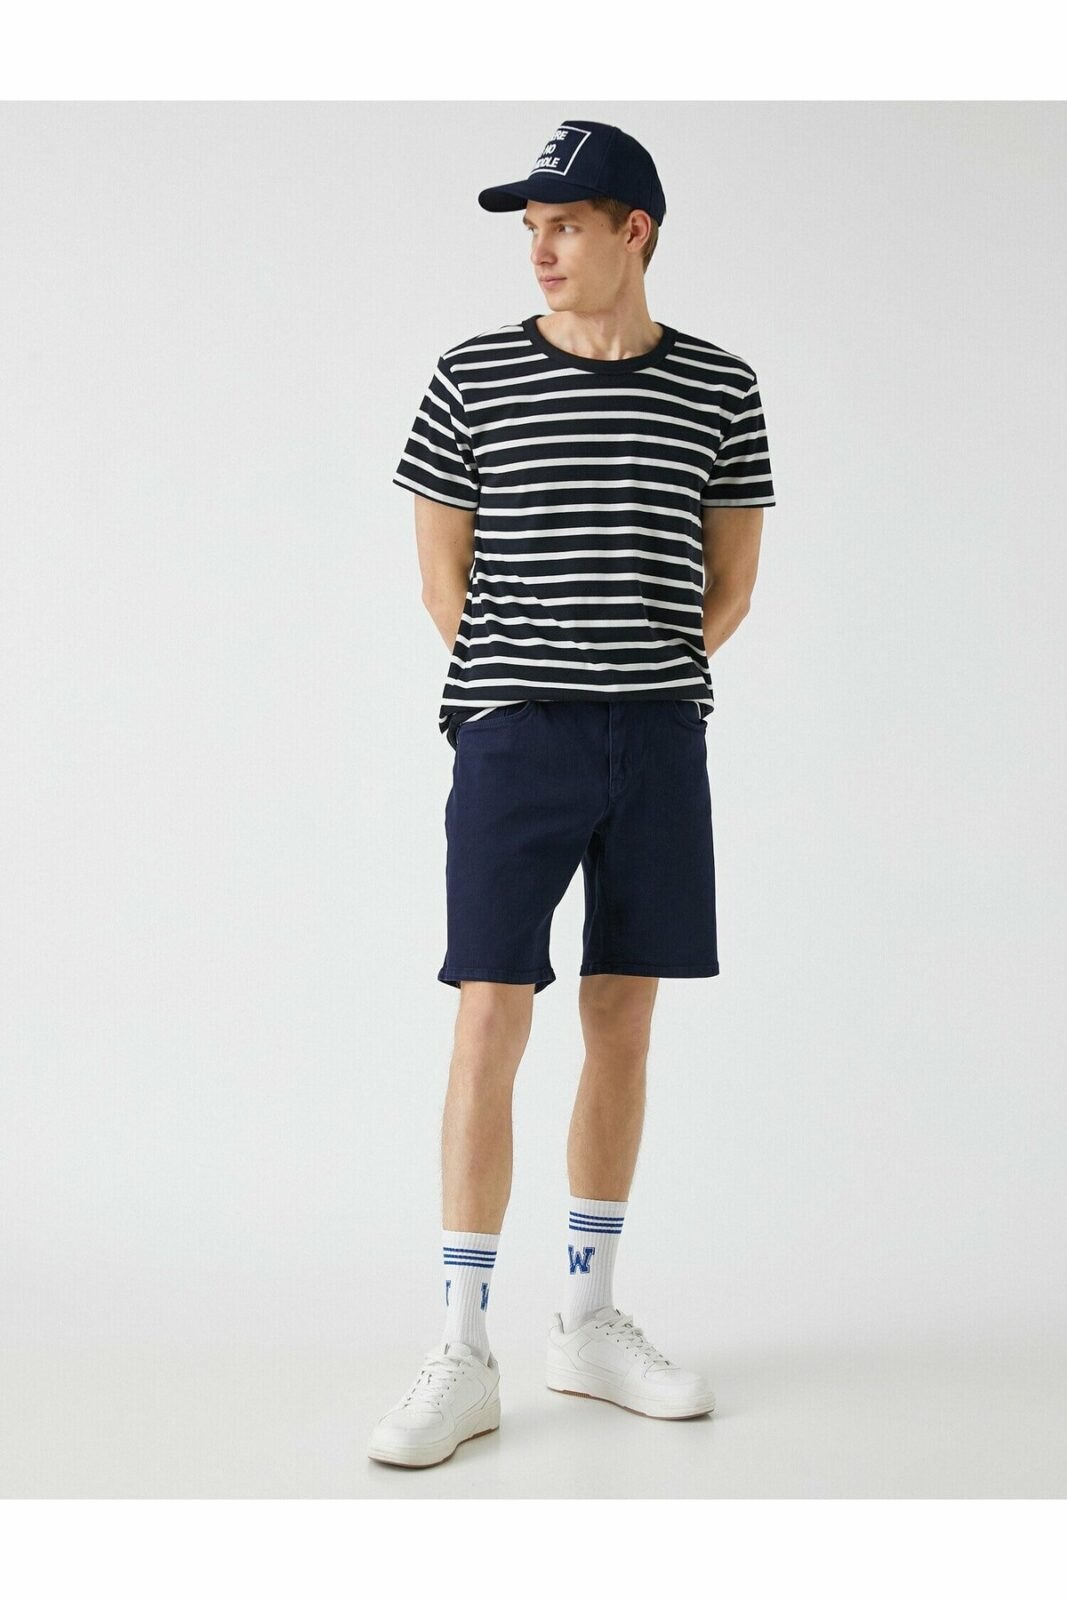 Koton Shorts - Navy blue